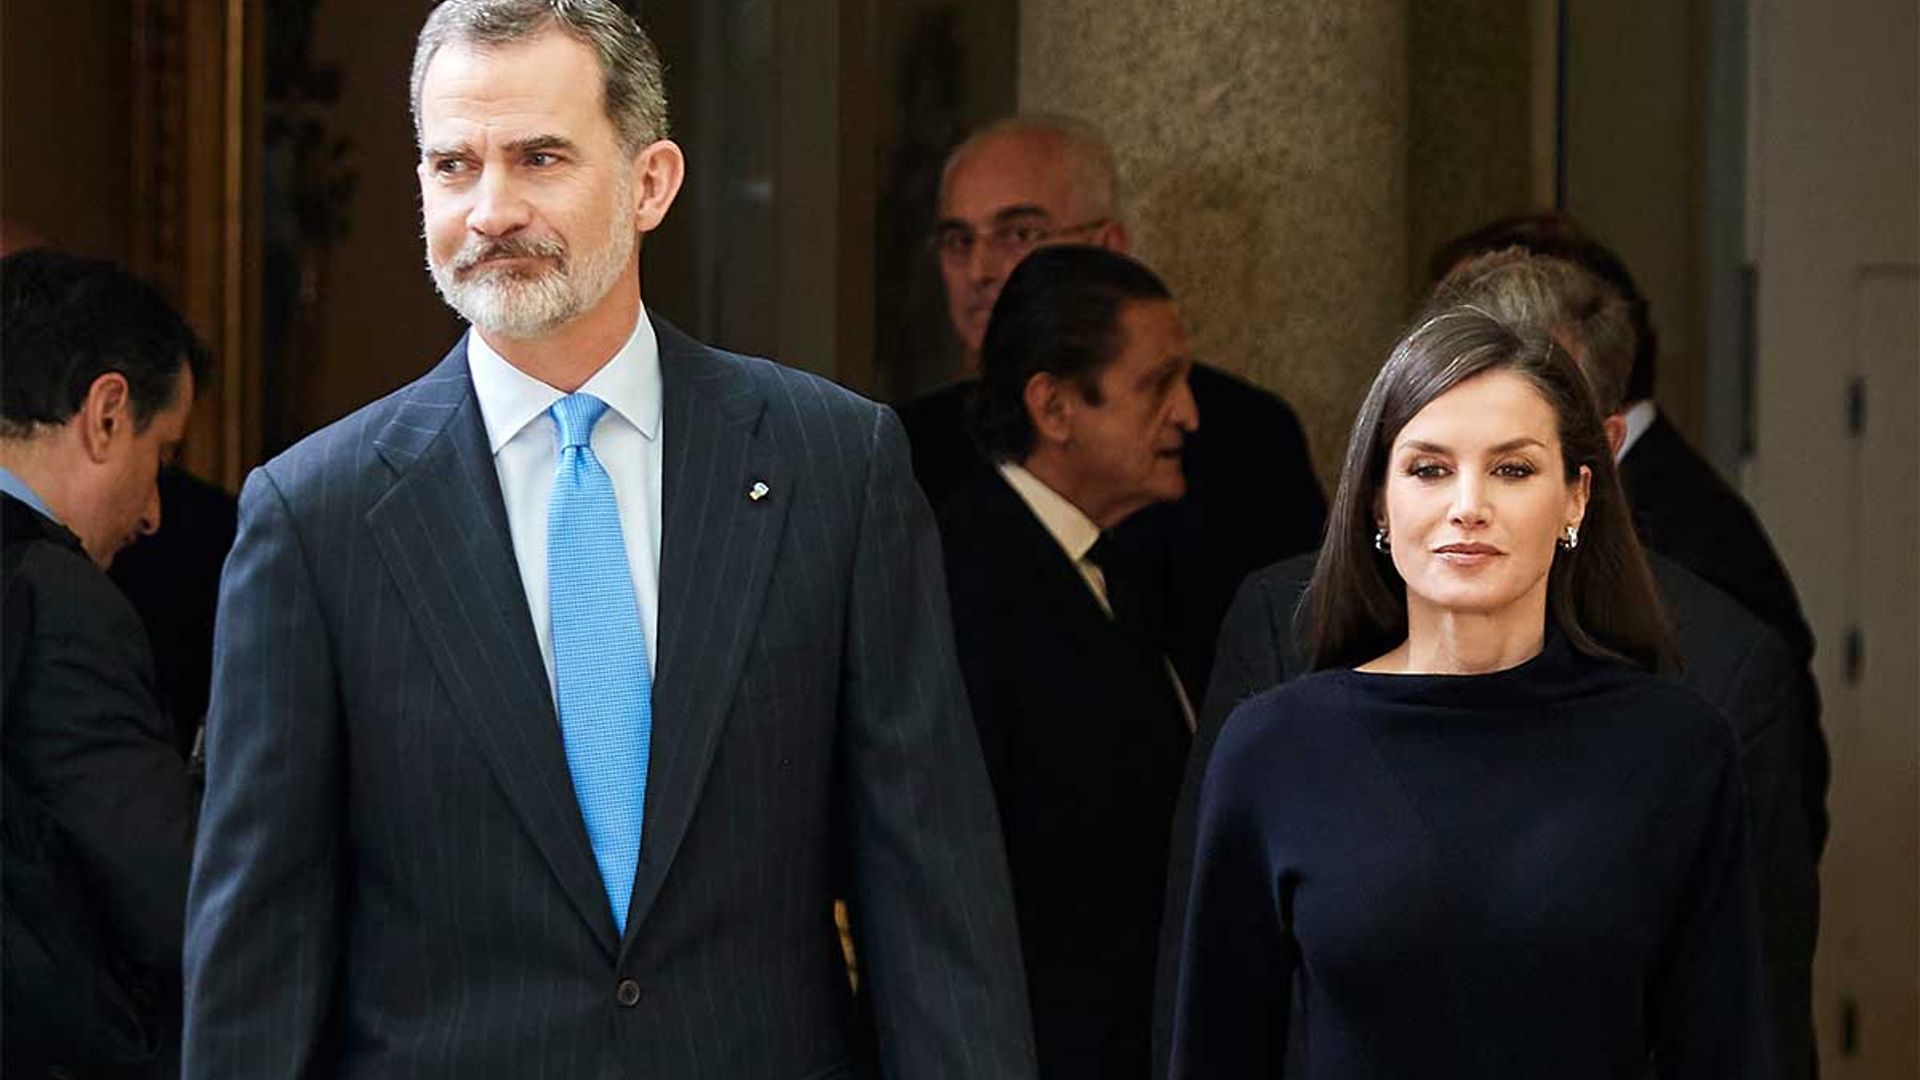 King Felipe and Queen Letizia's big royal event postponed amid COVID-19 crisis